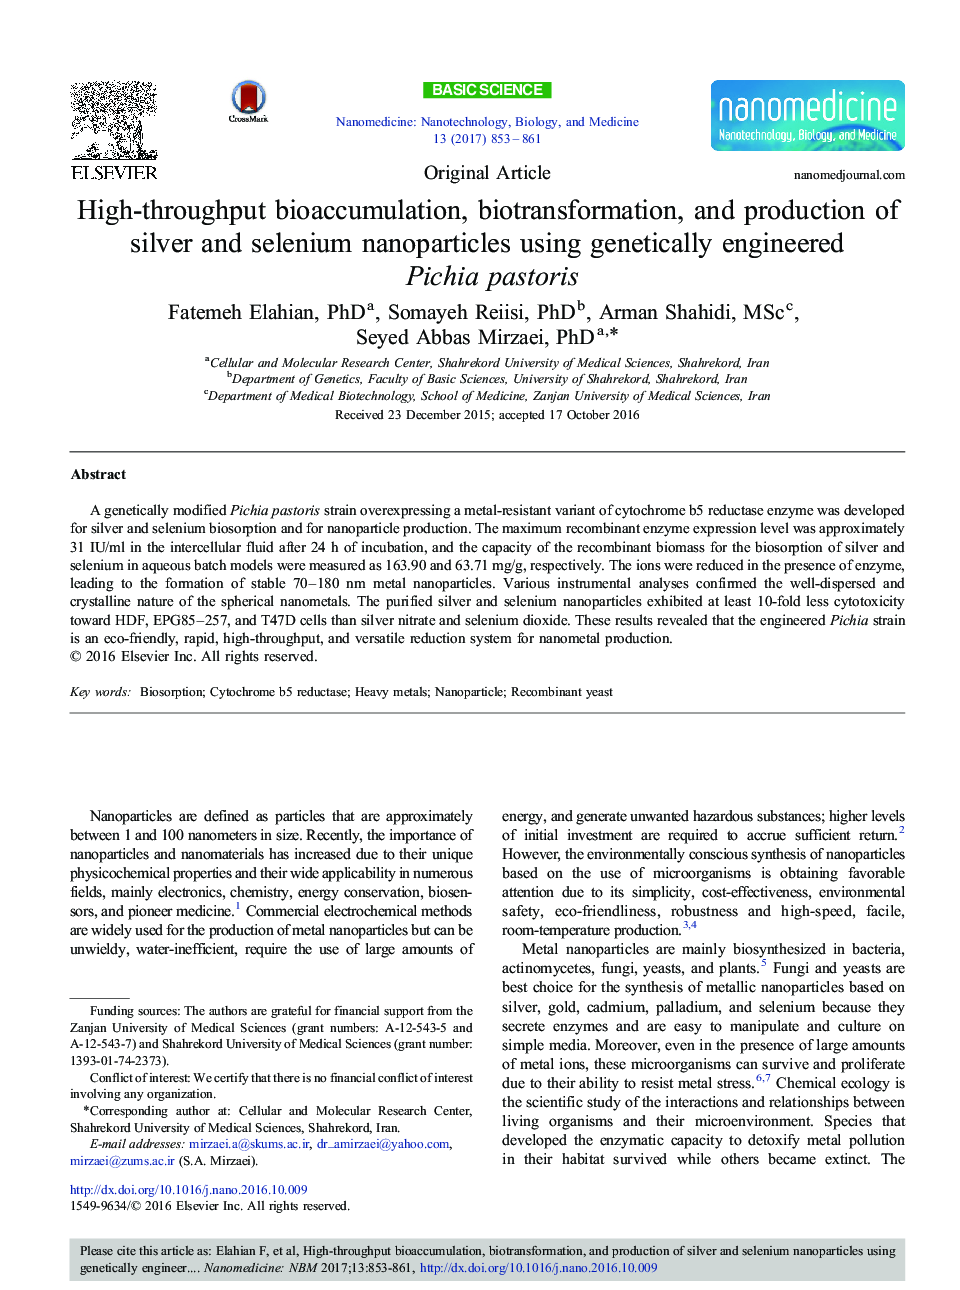 Original ArticleHigh-throughput bioaccumulation, biotransformation, and production of silver and selenium nanoparticles using genetically engineered Pichia pastoris